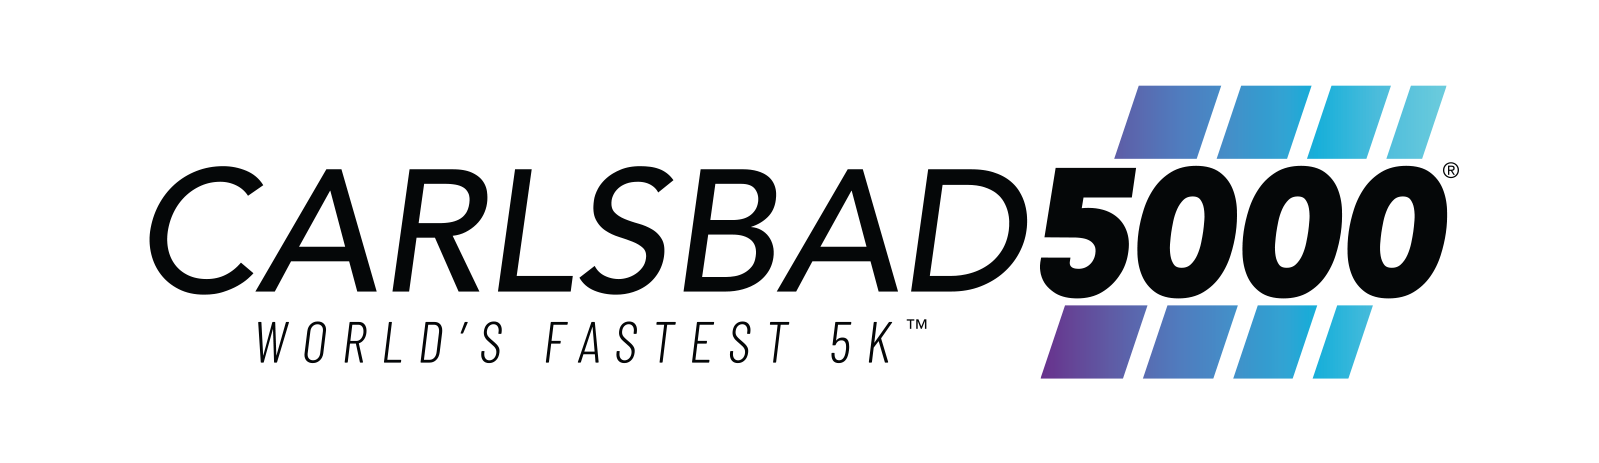 Carlsbad 5000 Logo Hor Black